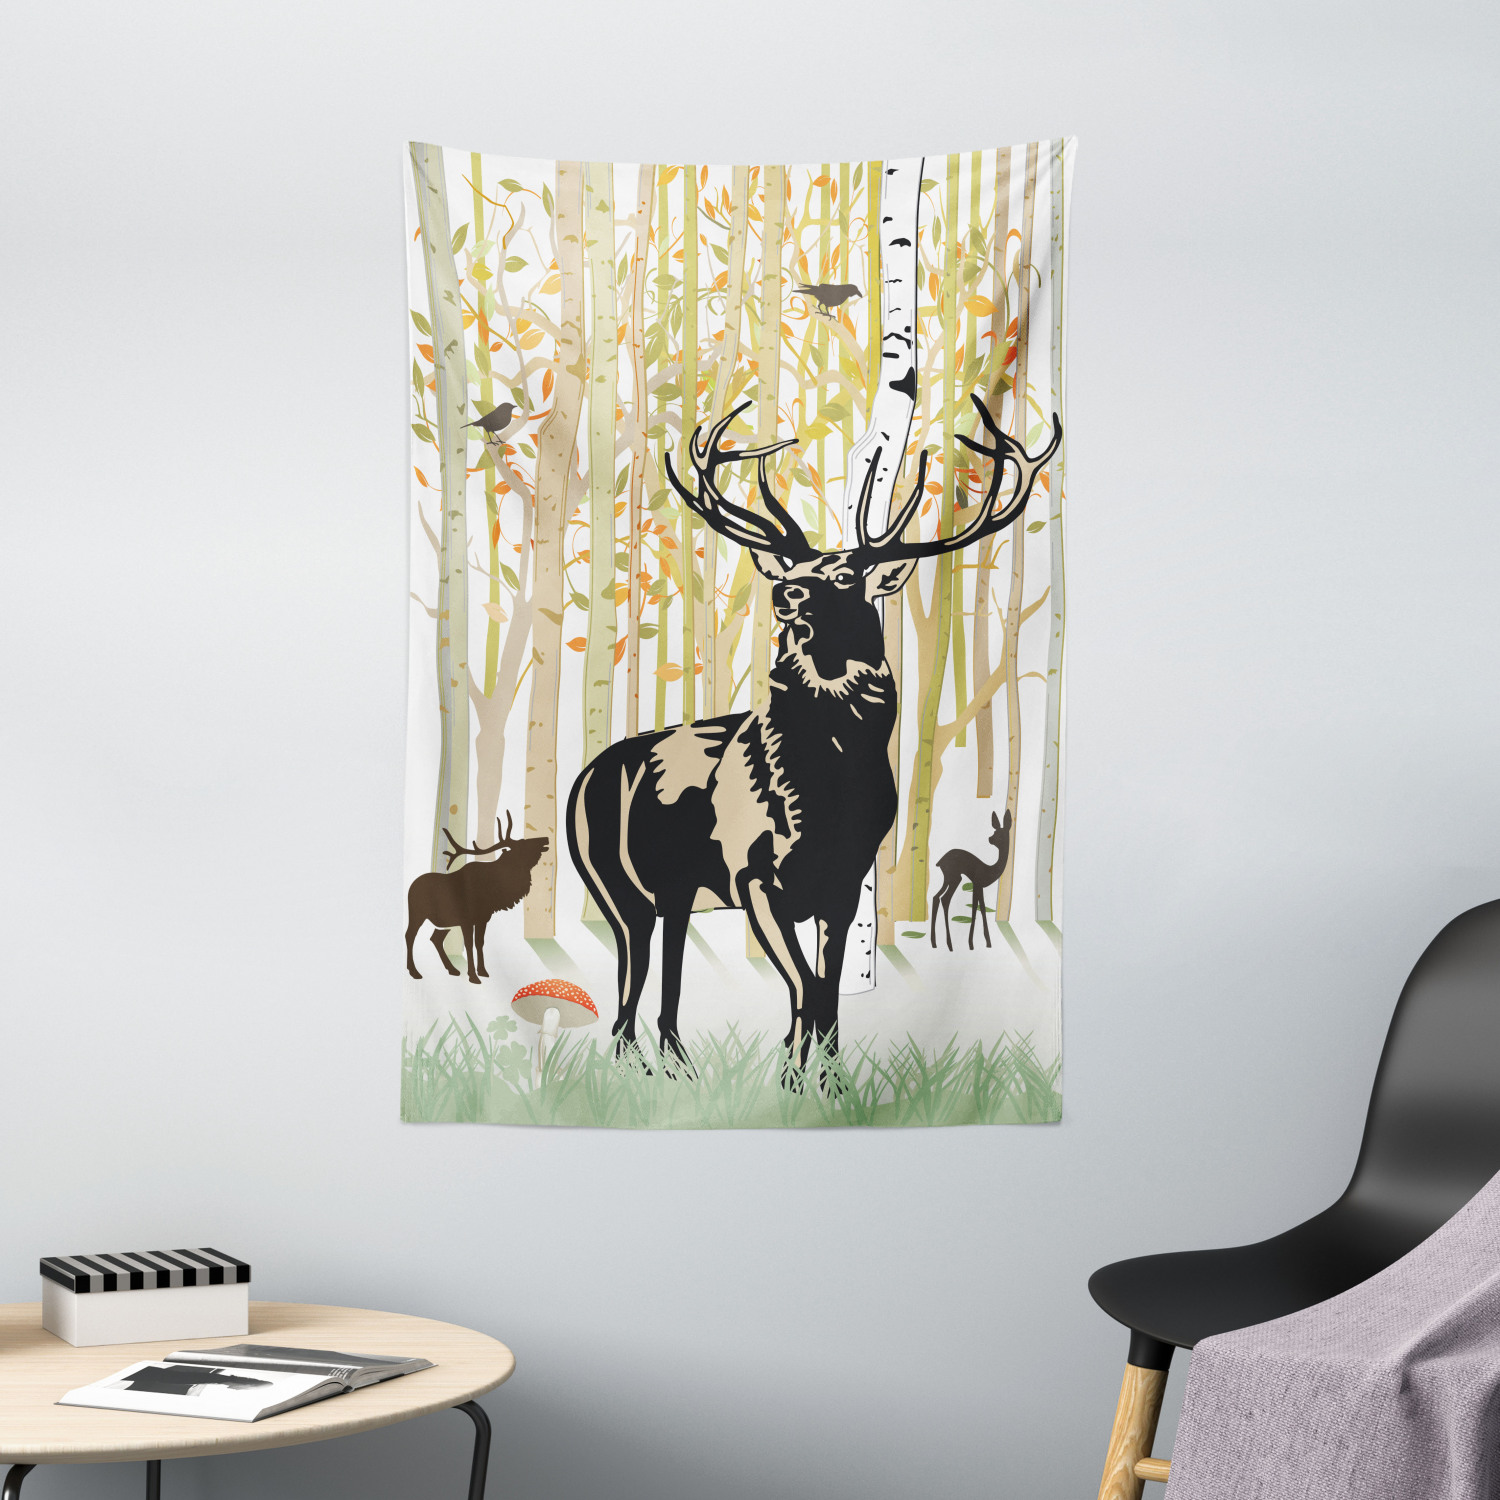 Animal Decor Deer in Snow Forest Bedroom Living Room Dorm Tapestry Wall Hanging 